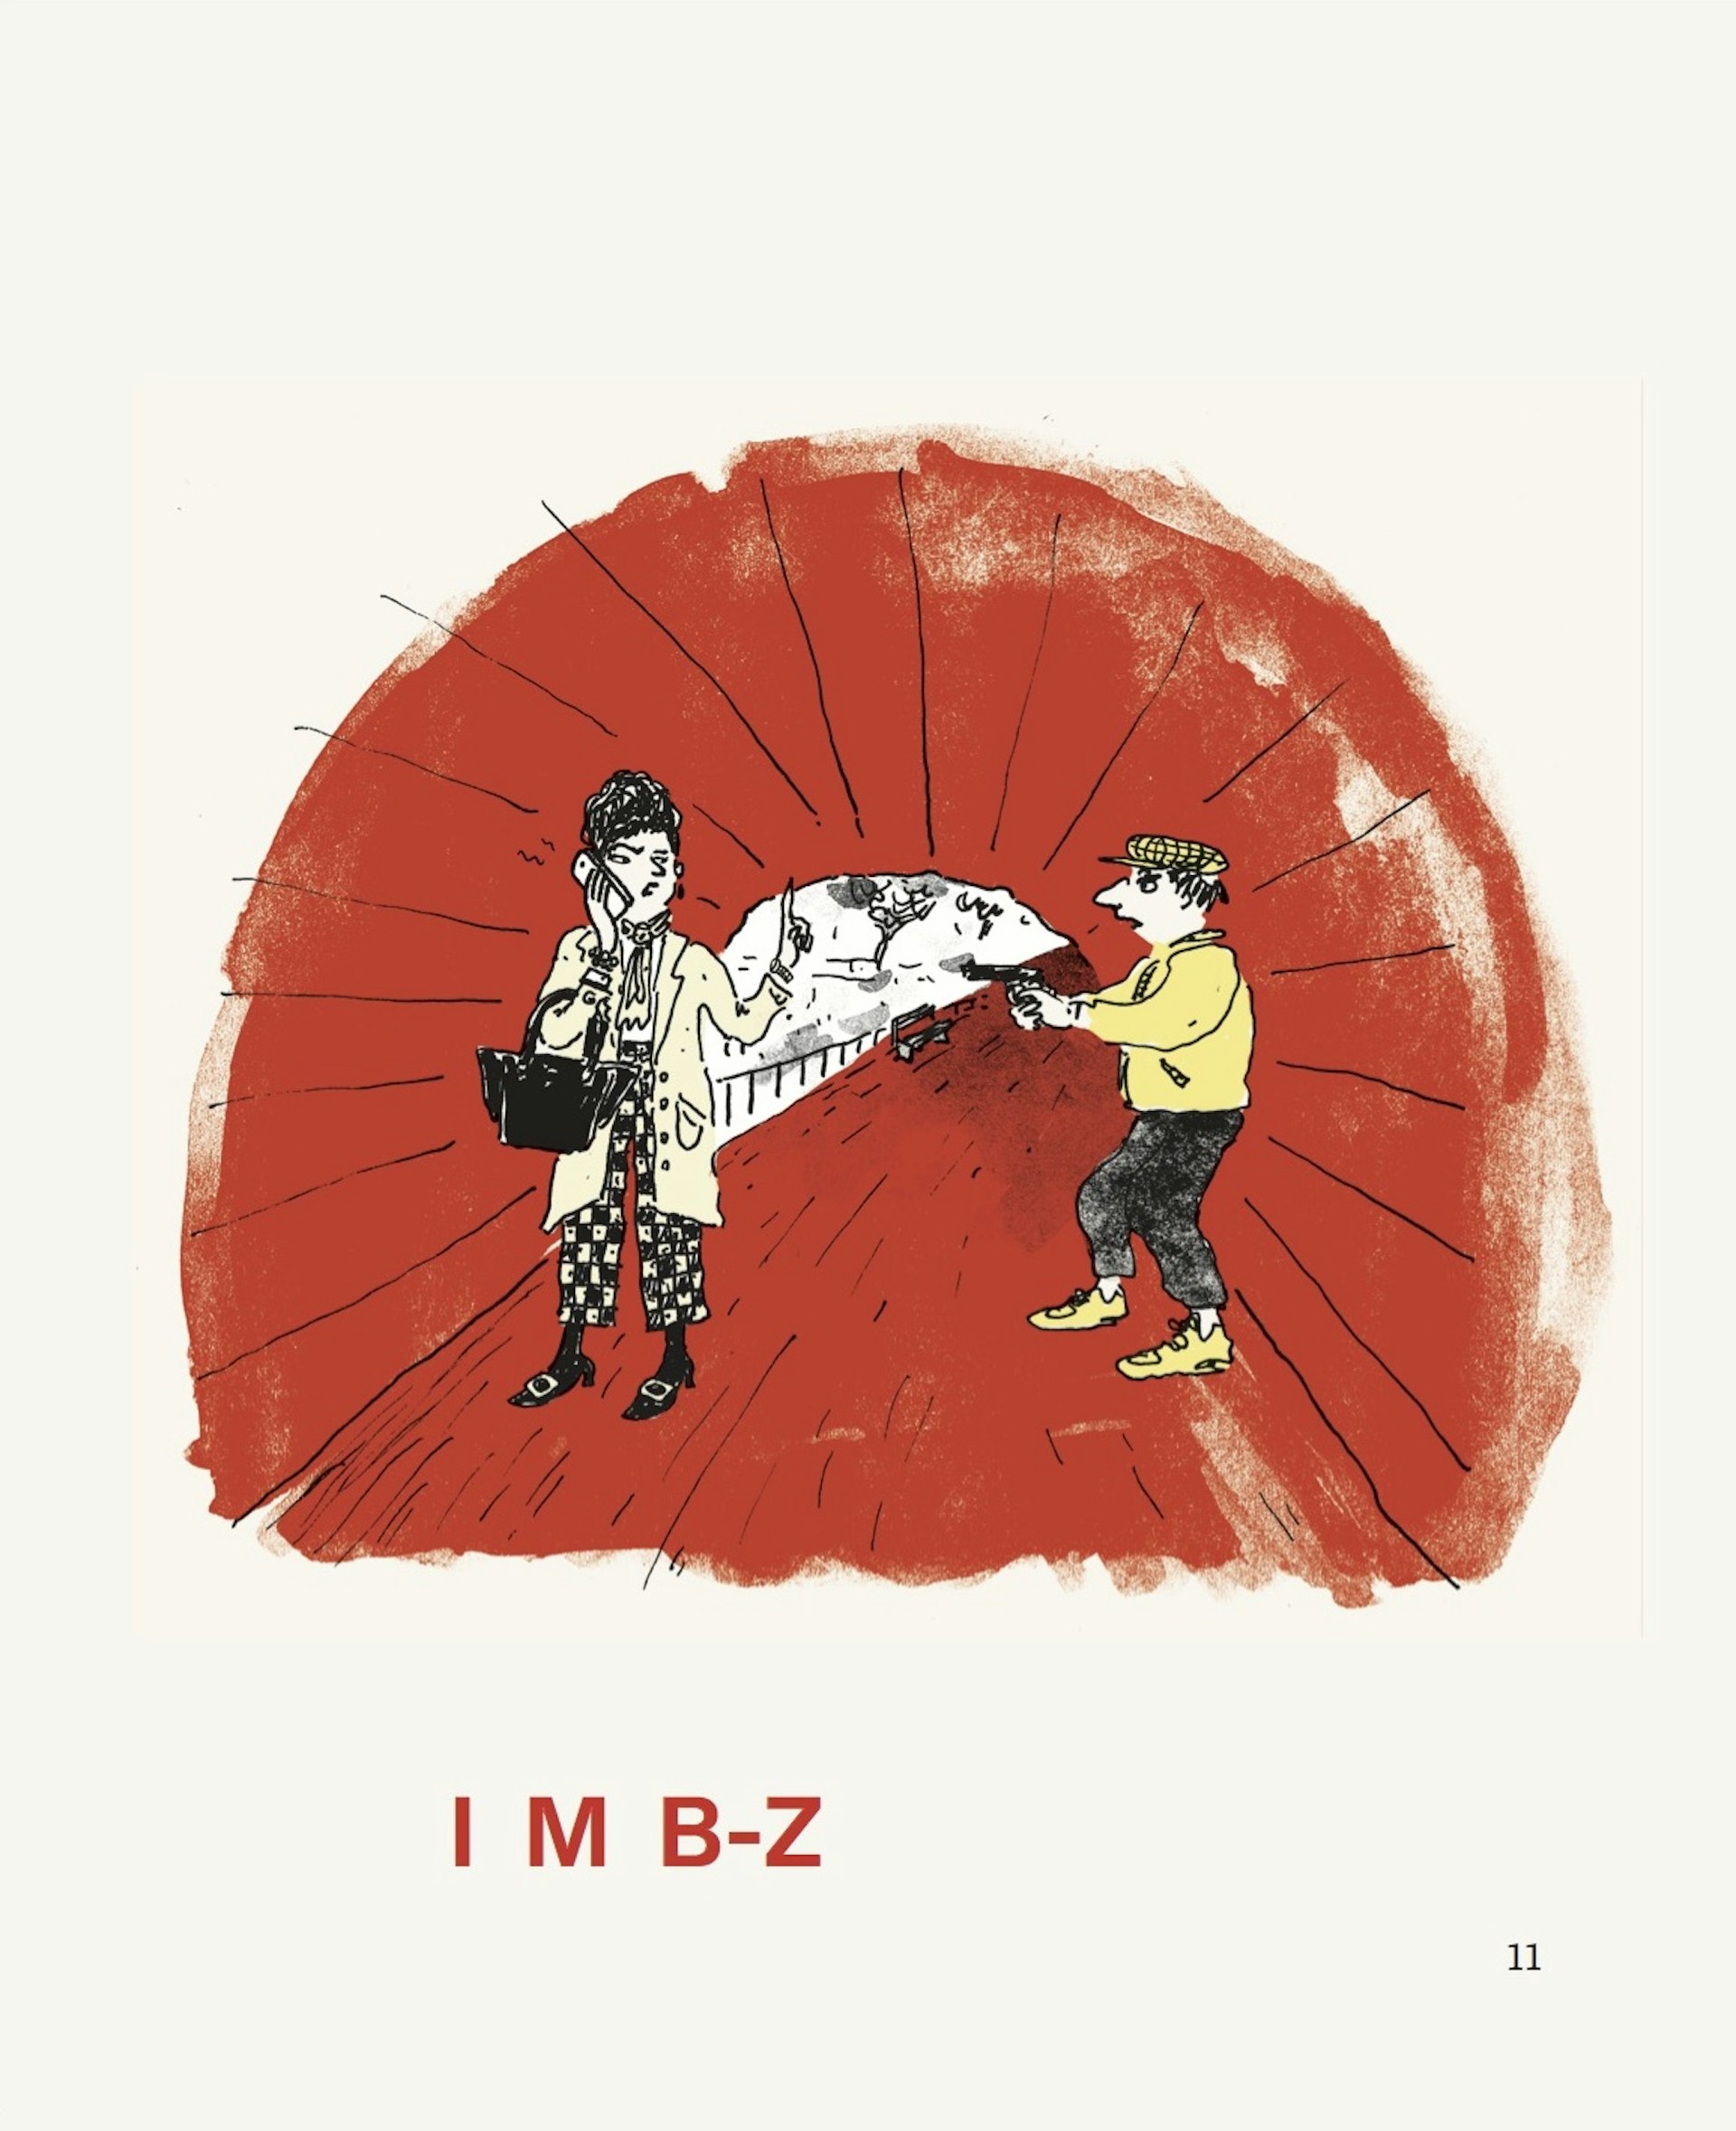 I M B-Z illustration copy